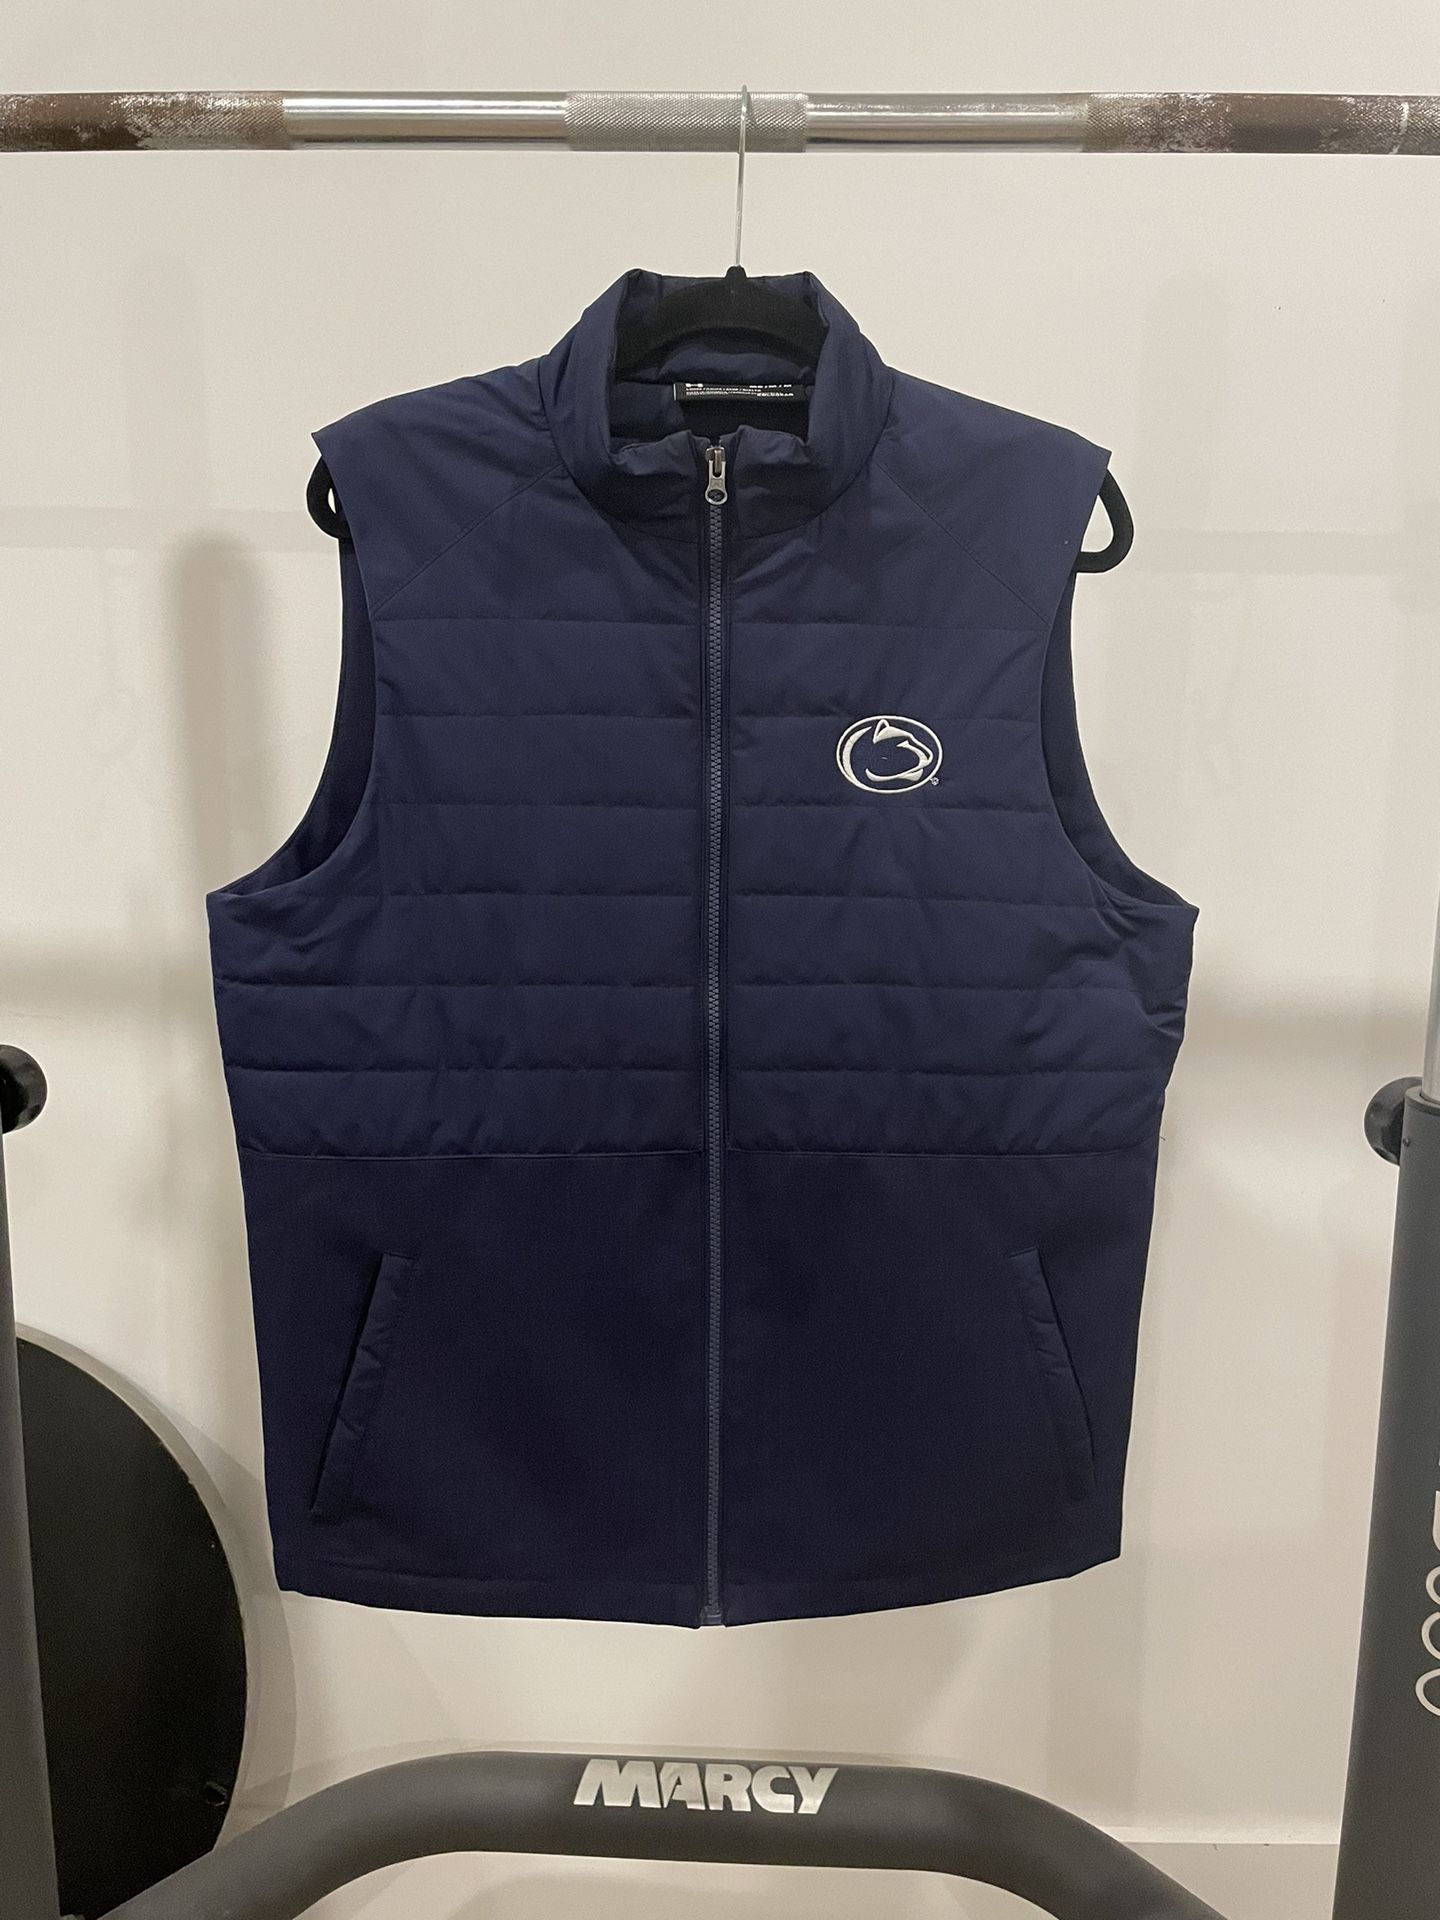 Penn State Under Armour Vest